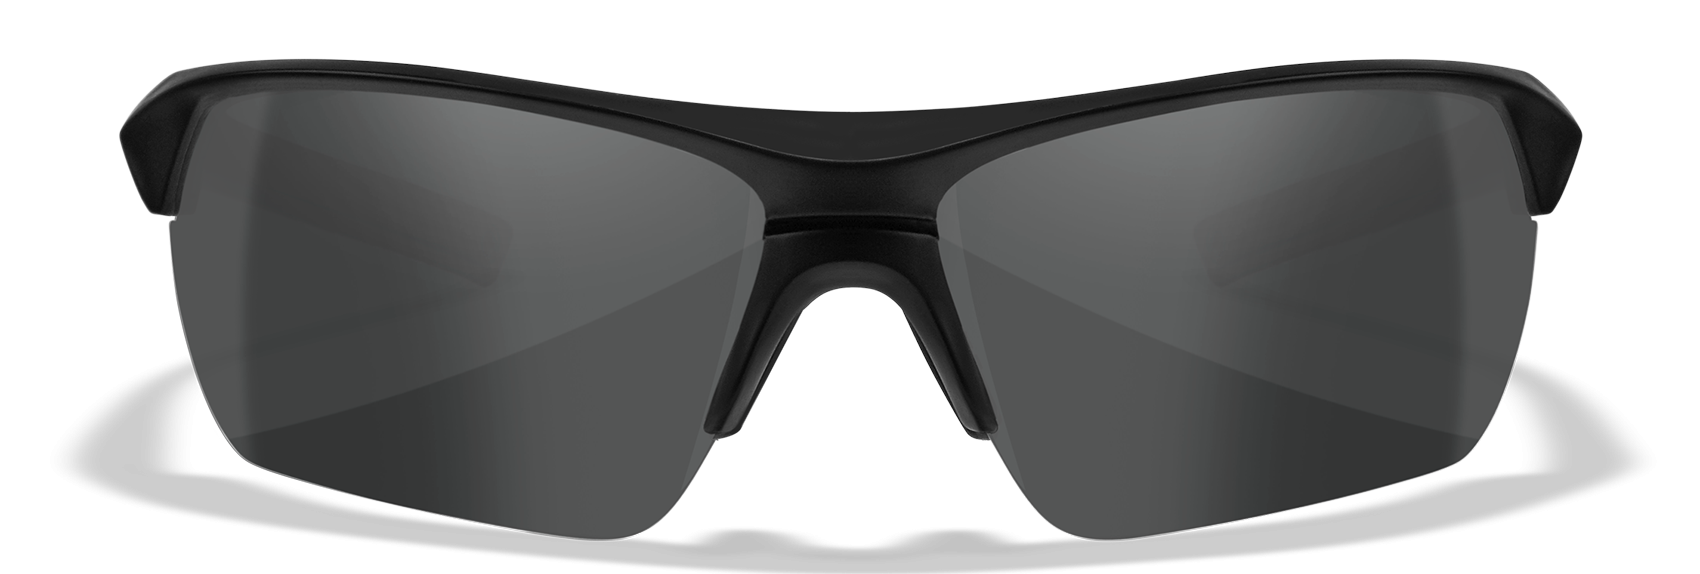 Wiley X Guard Advanced Matte Black Polycarbonate Sunglasses